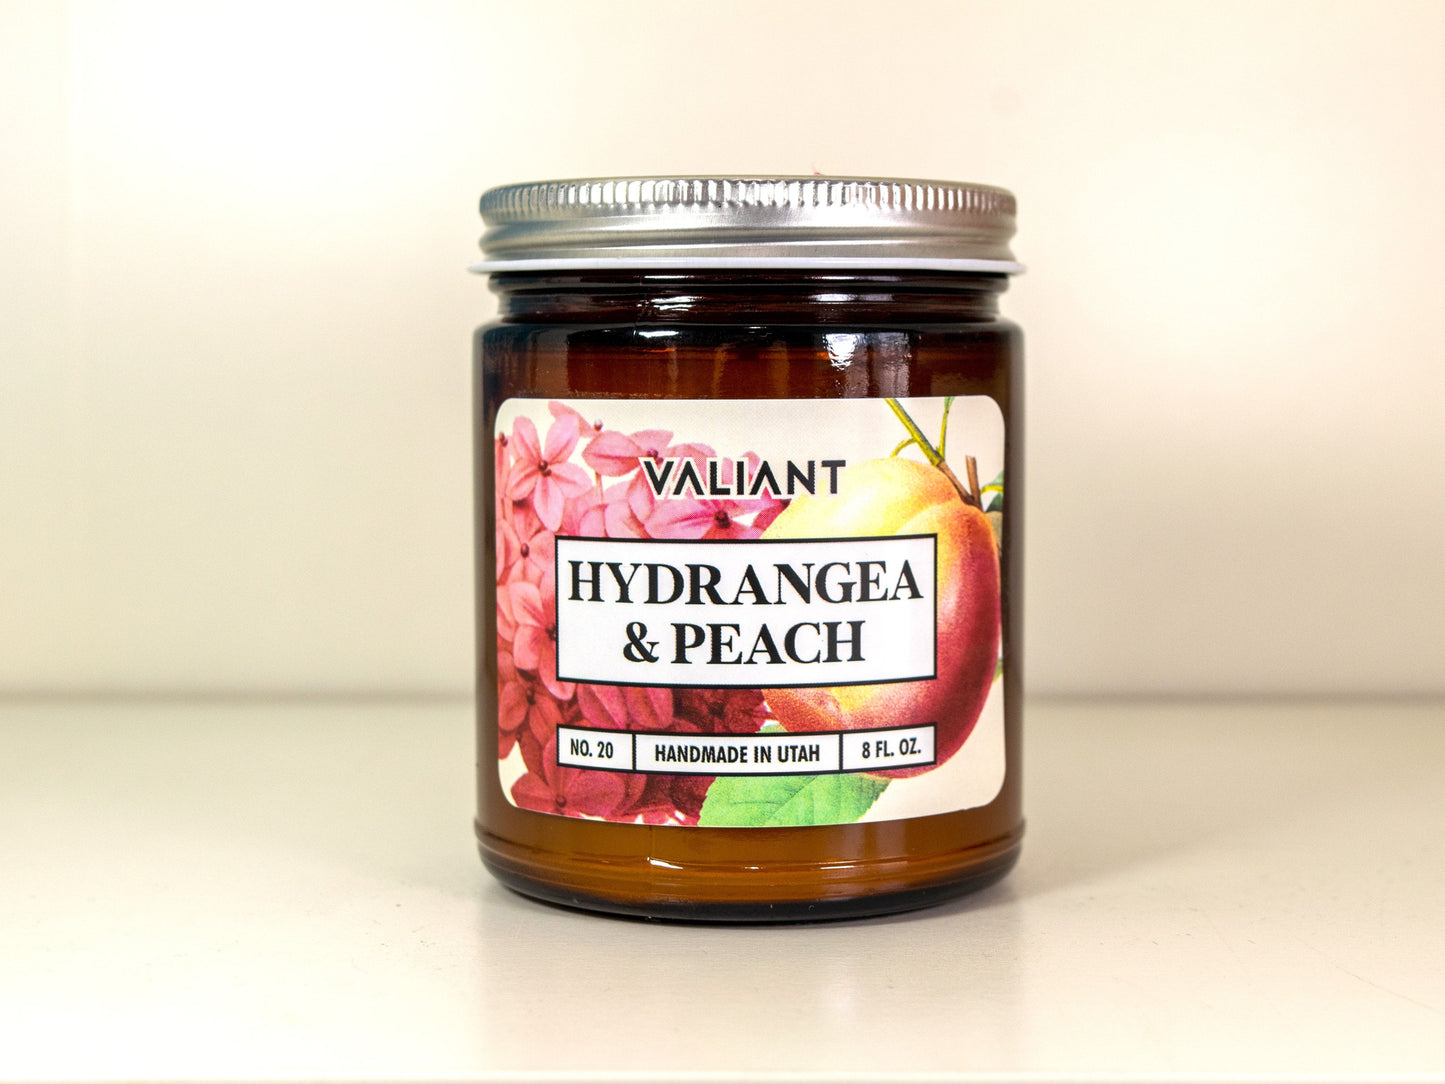 Hydrangea & Peach Botanical Candle in Amber Glass